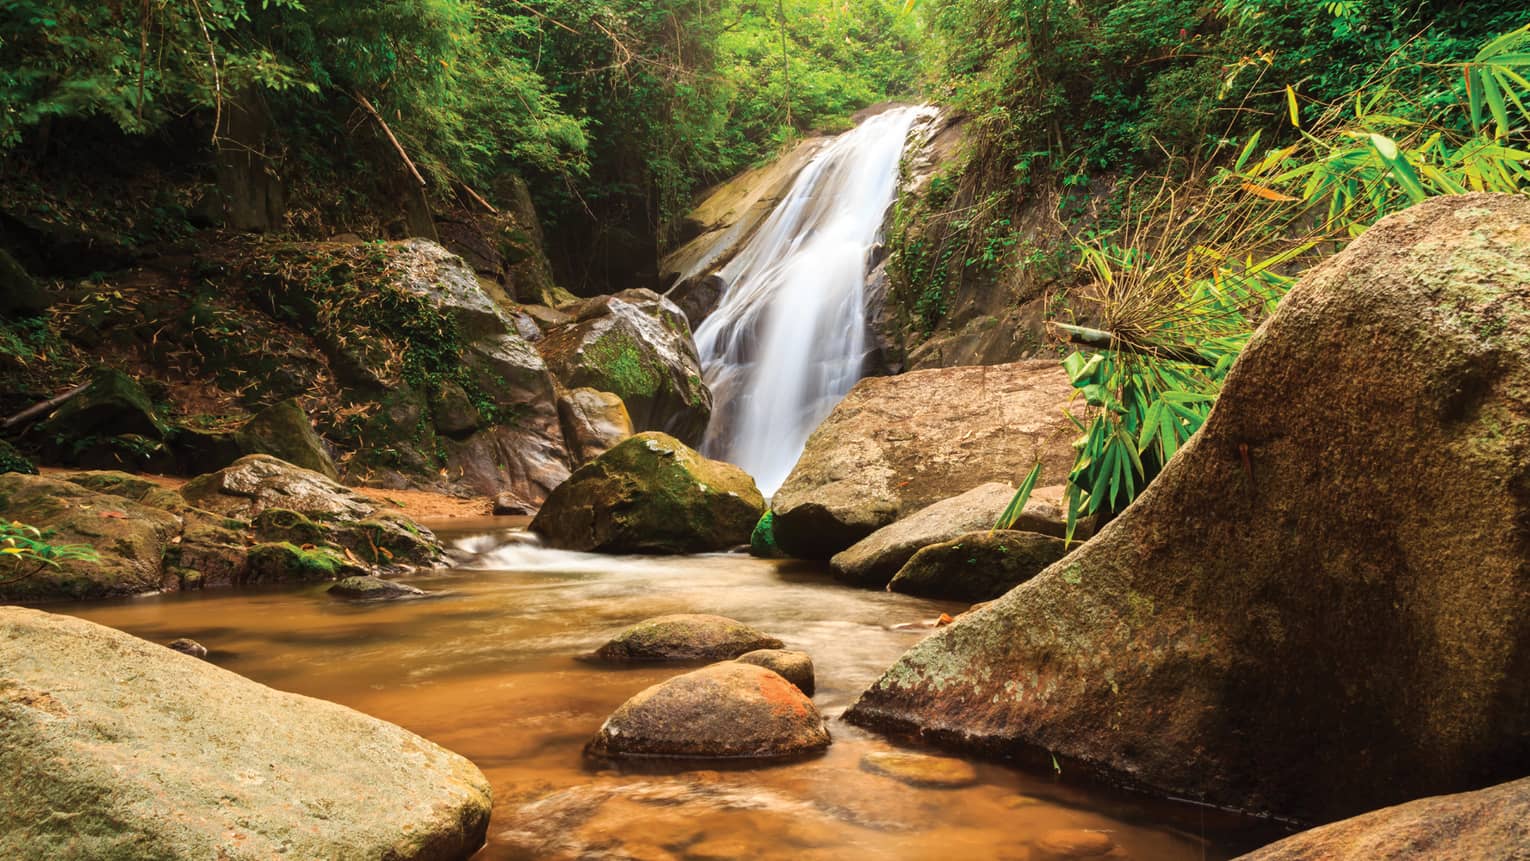 Serene waterfall in the Thai jungle, green foliage, rocks